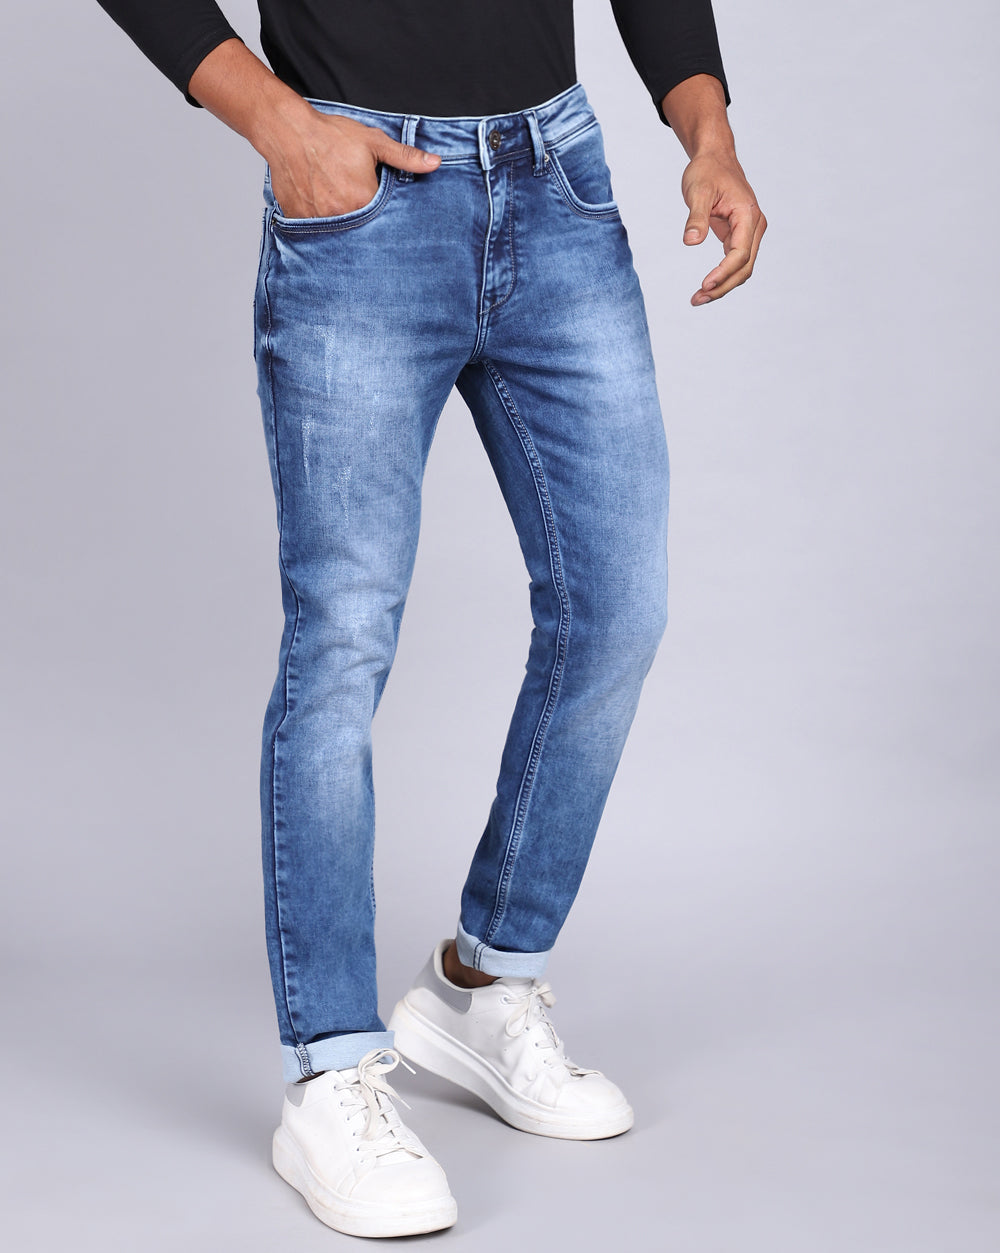 Super Slim Fit Jeans-Faded Light Blue